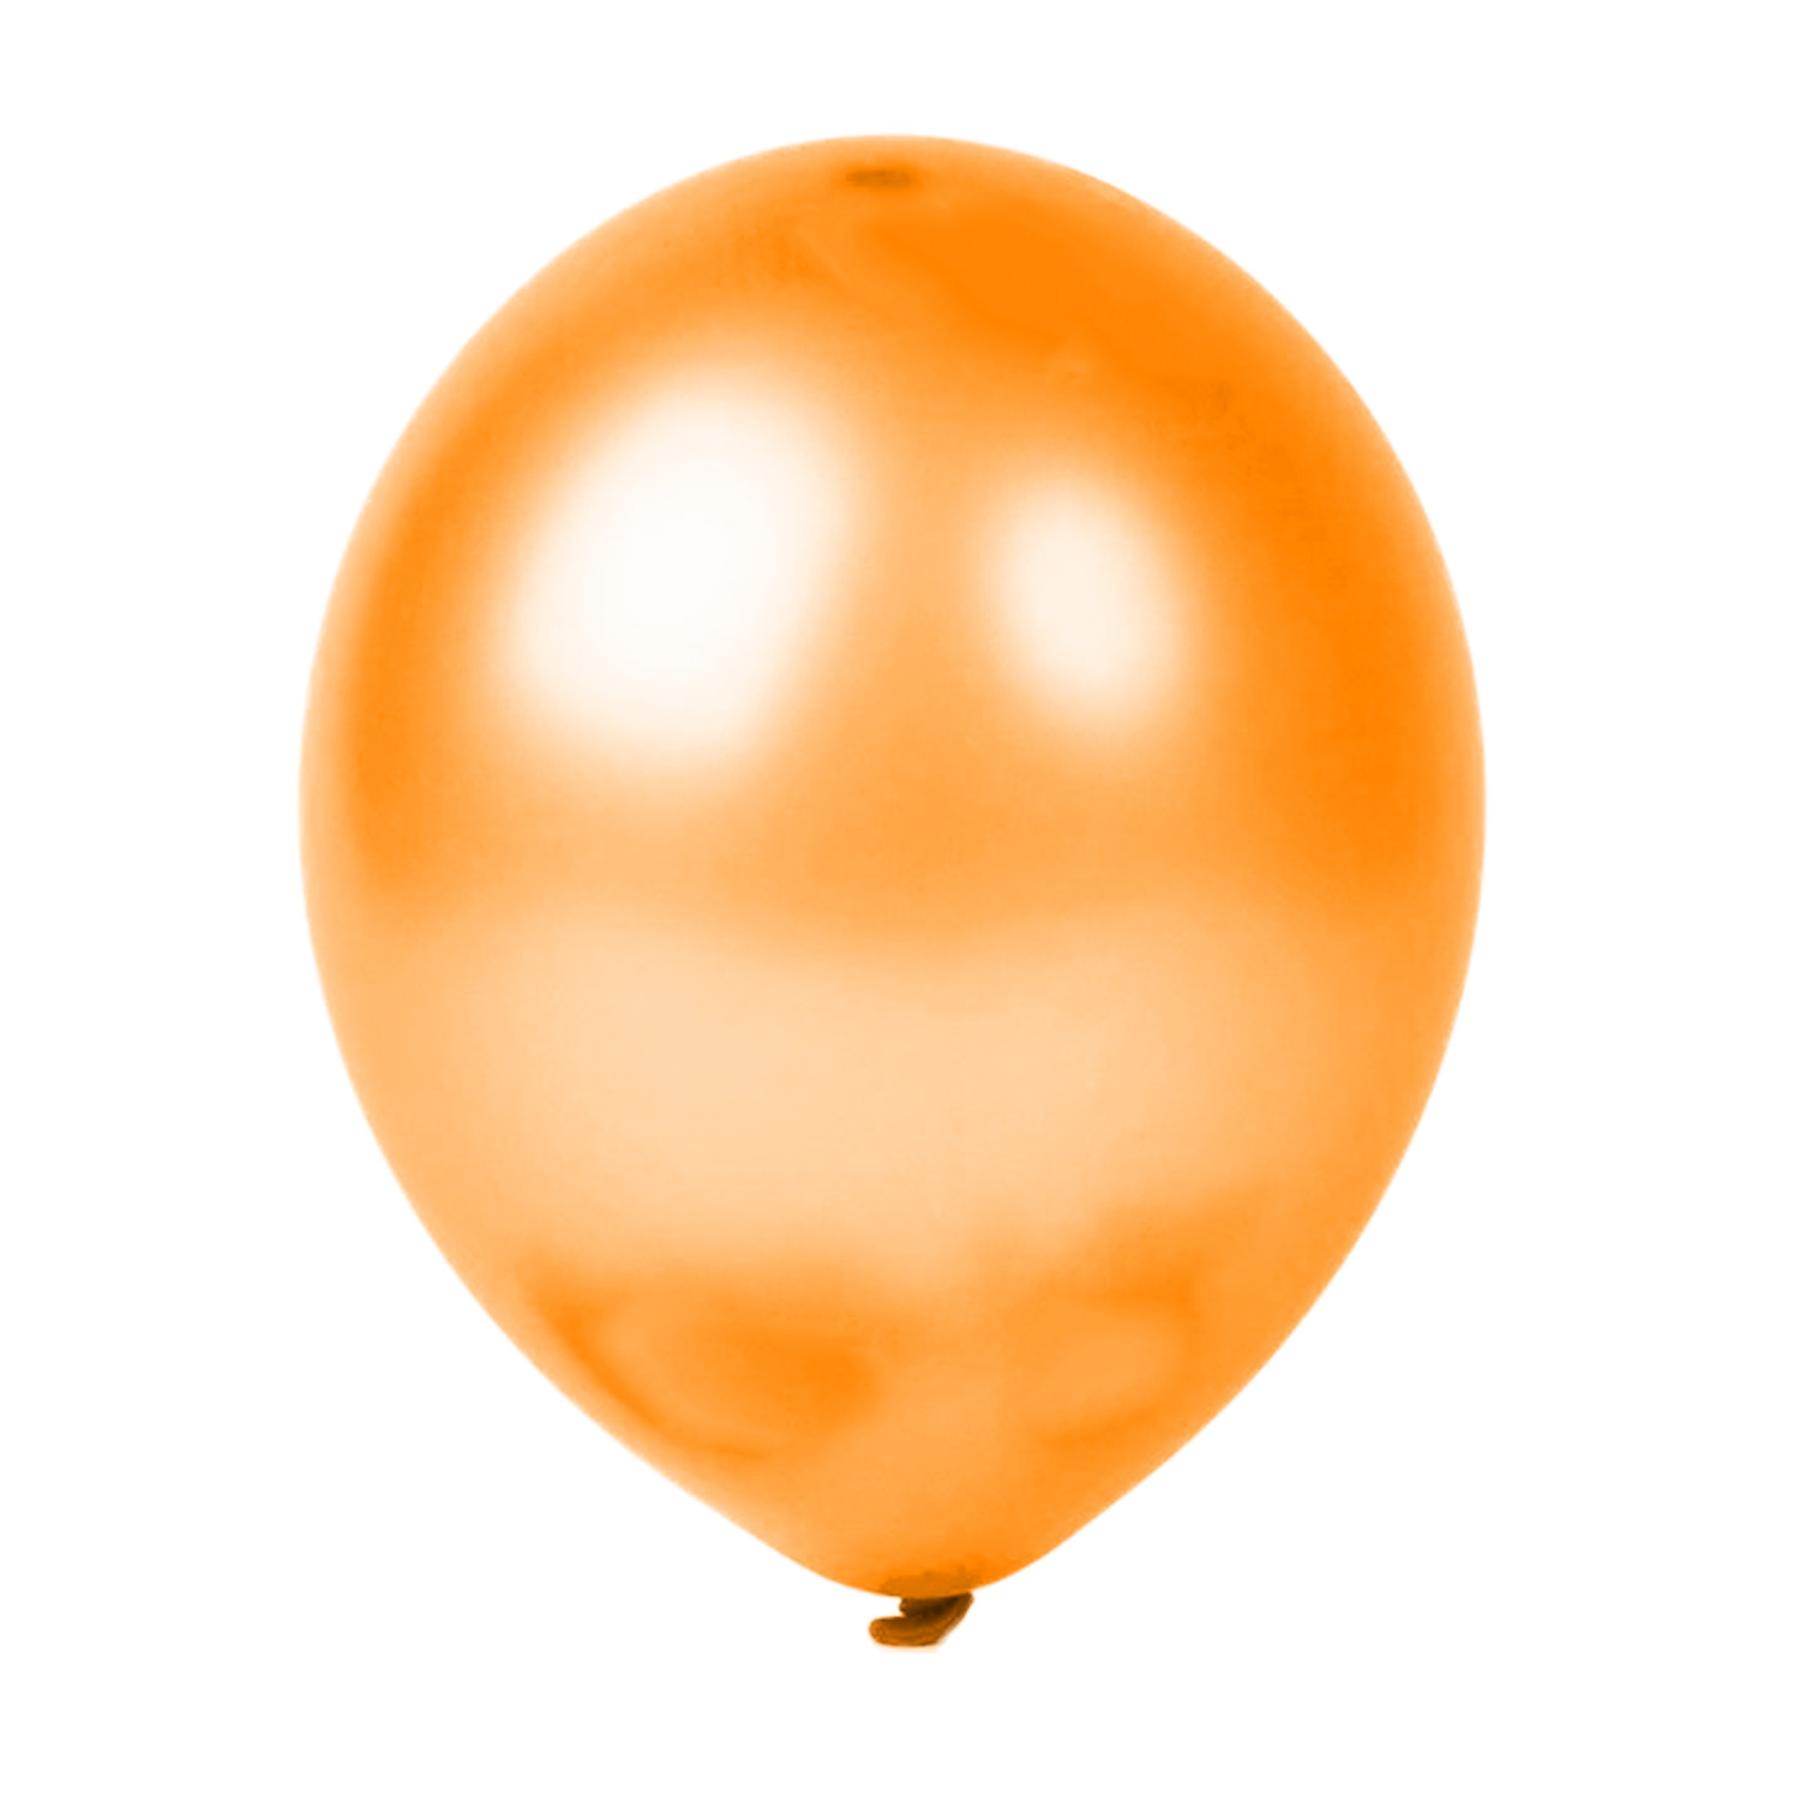 100er SET - Latex Luftballon - 12inch - Orange - Metallic (glänzend)